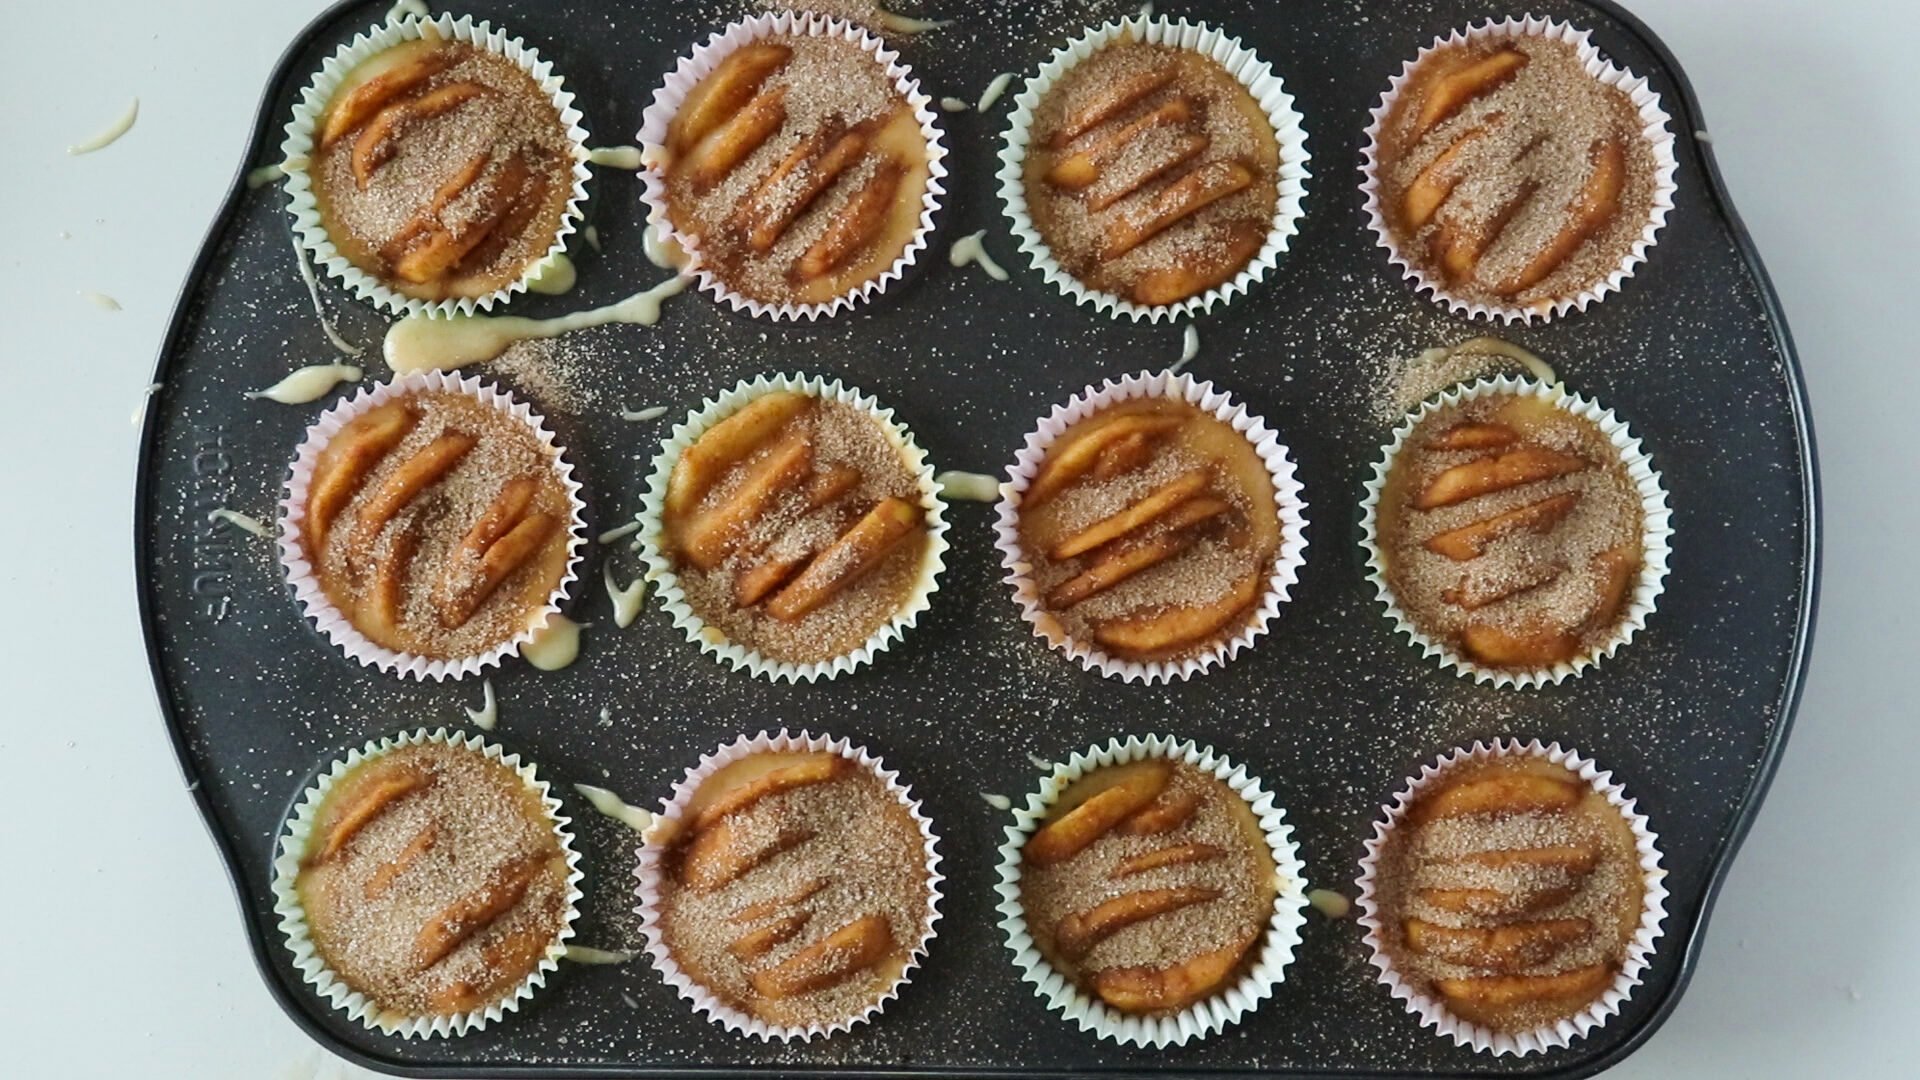 Cinnamon apple muffins before baking.